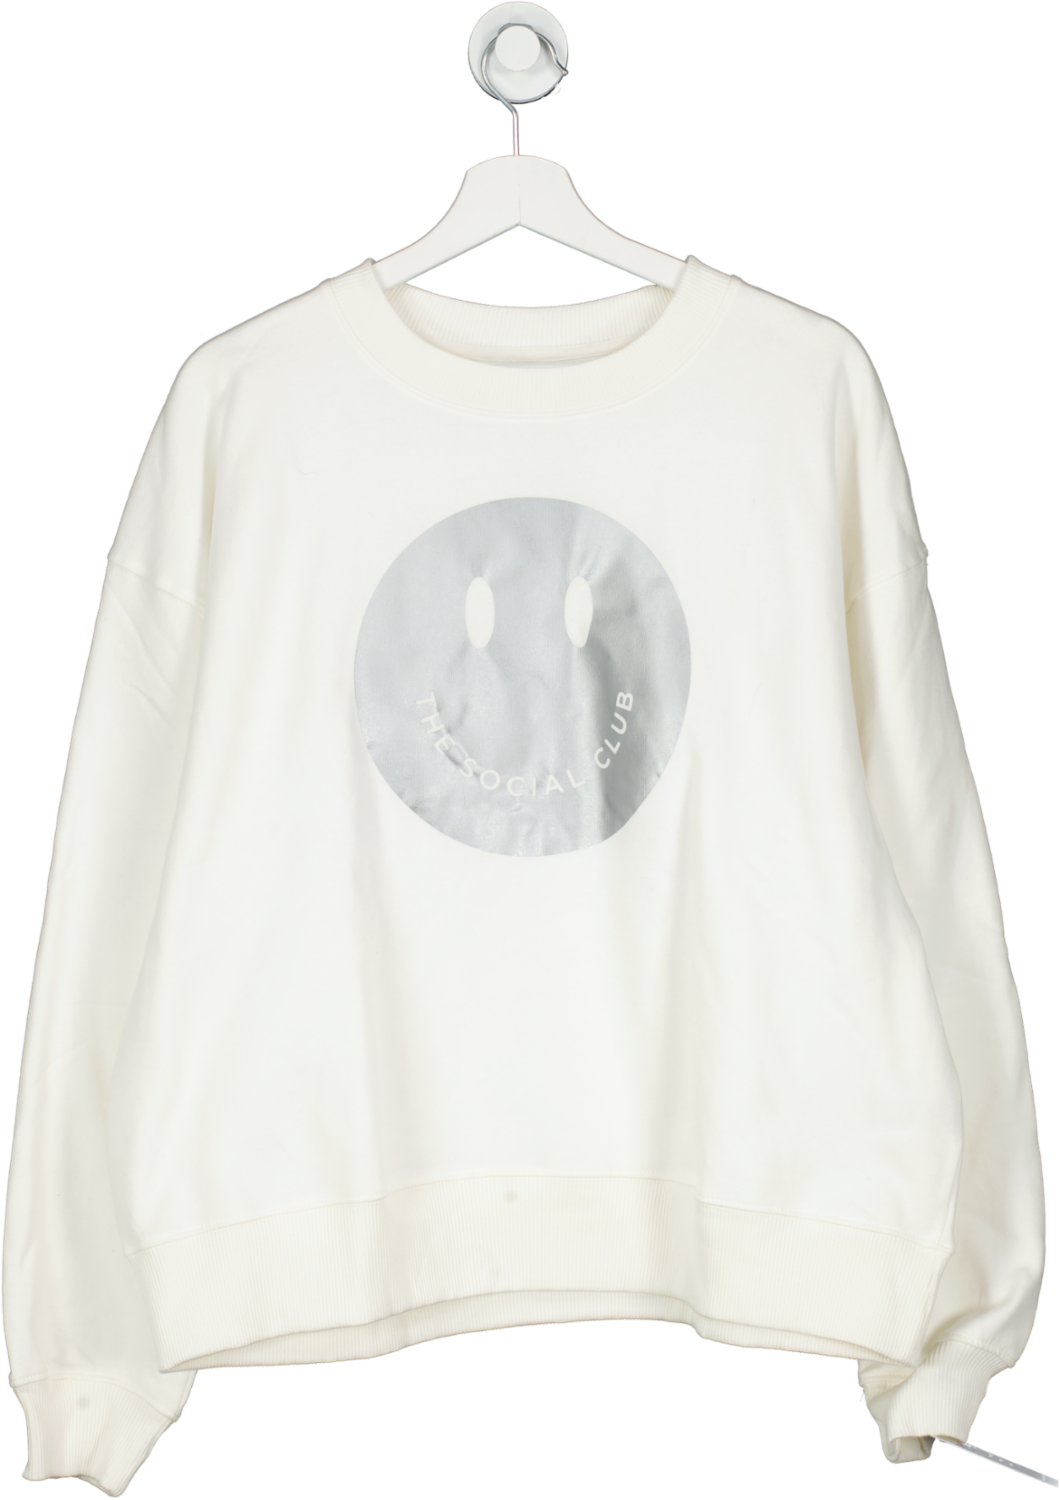 the social club White And Silver Organic Cotton Sweatshirt UK XL